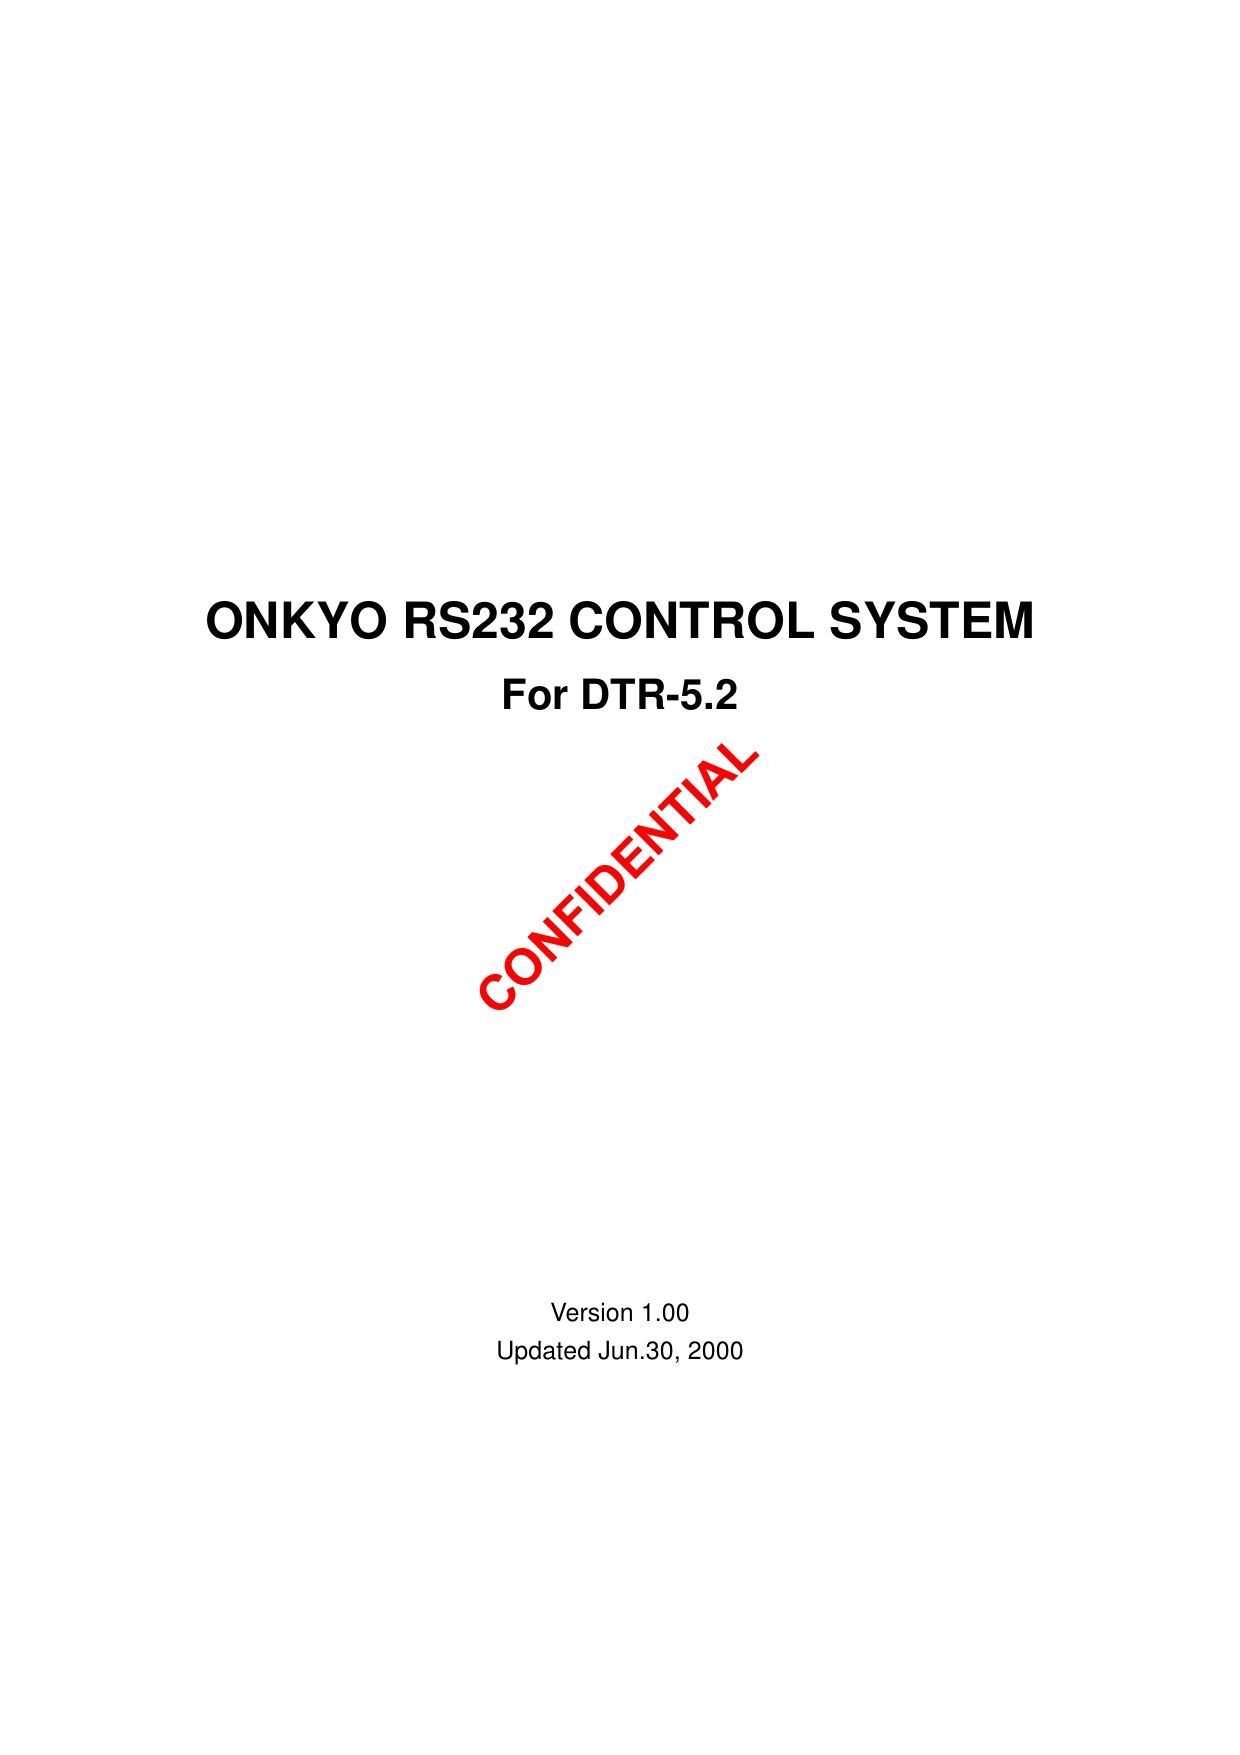 Onkyo DTR 5.2 RS 232 Service Manual